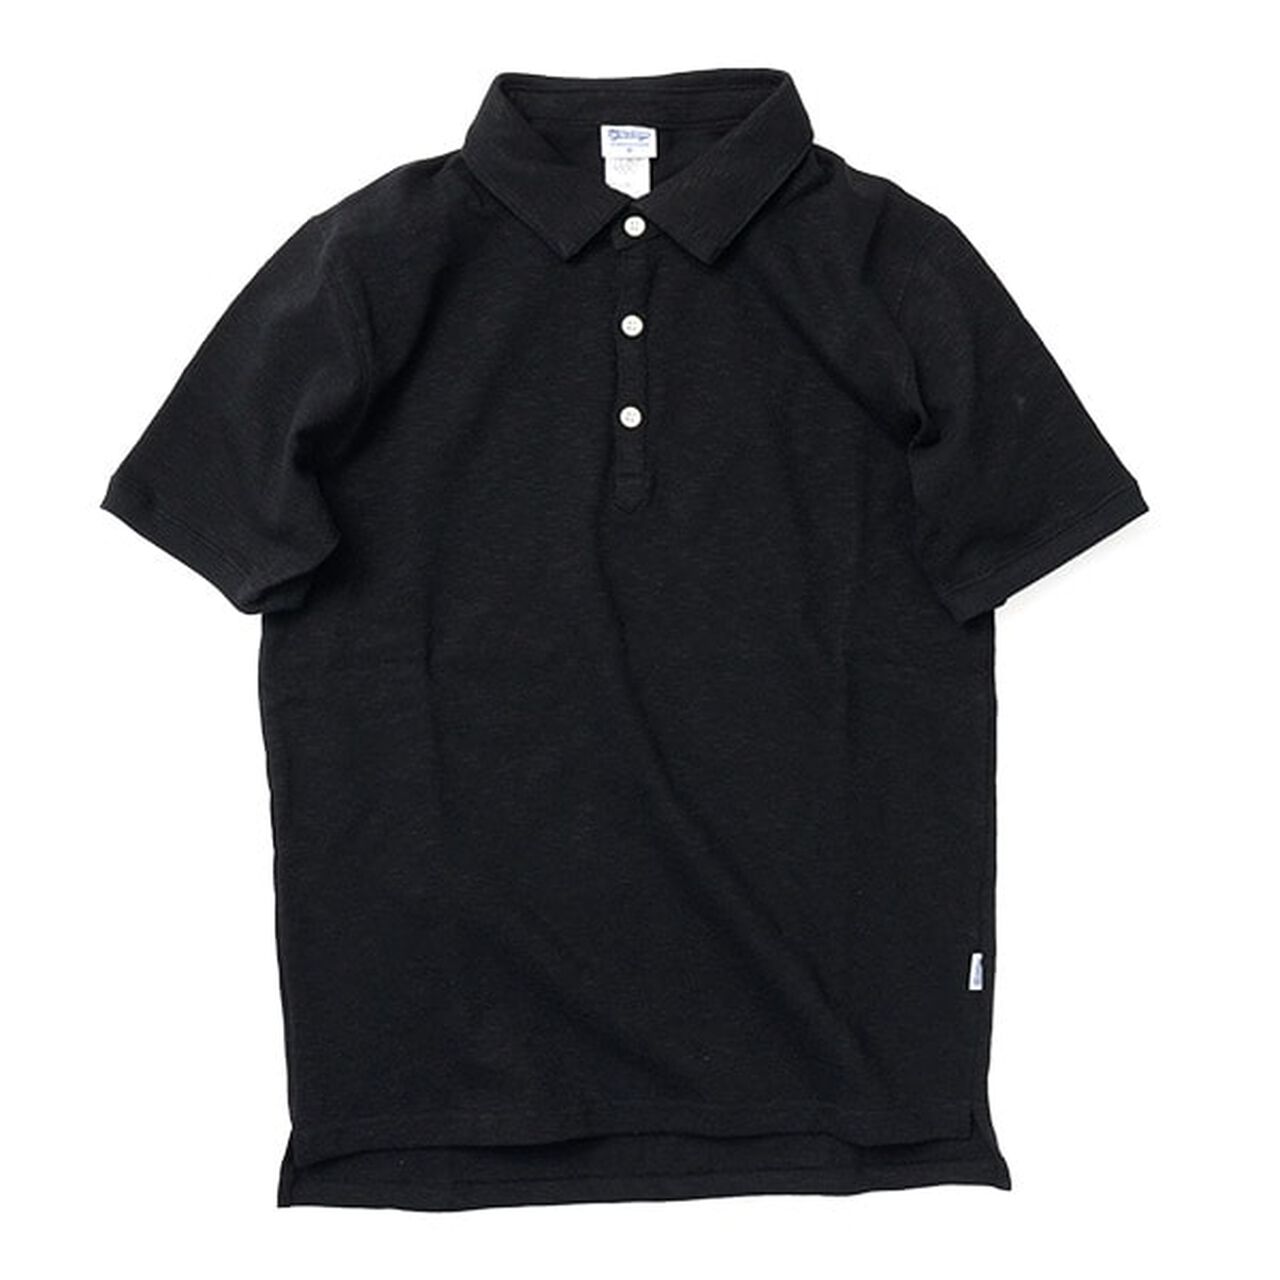 Organic Polo Shirt,Black, large image number 0